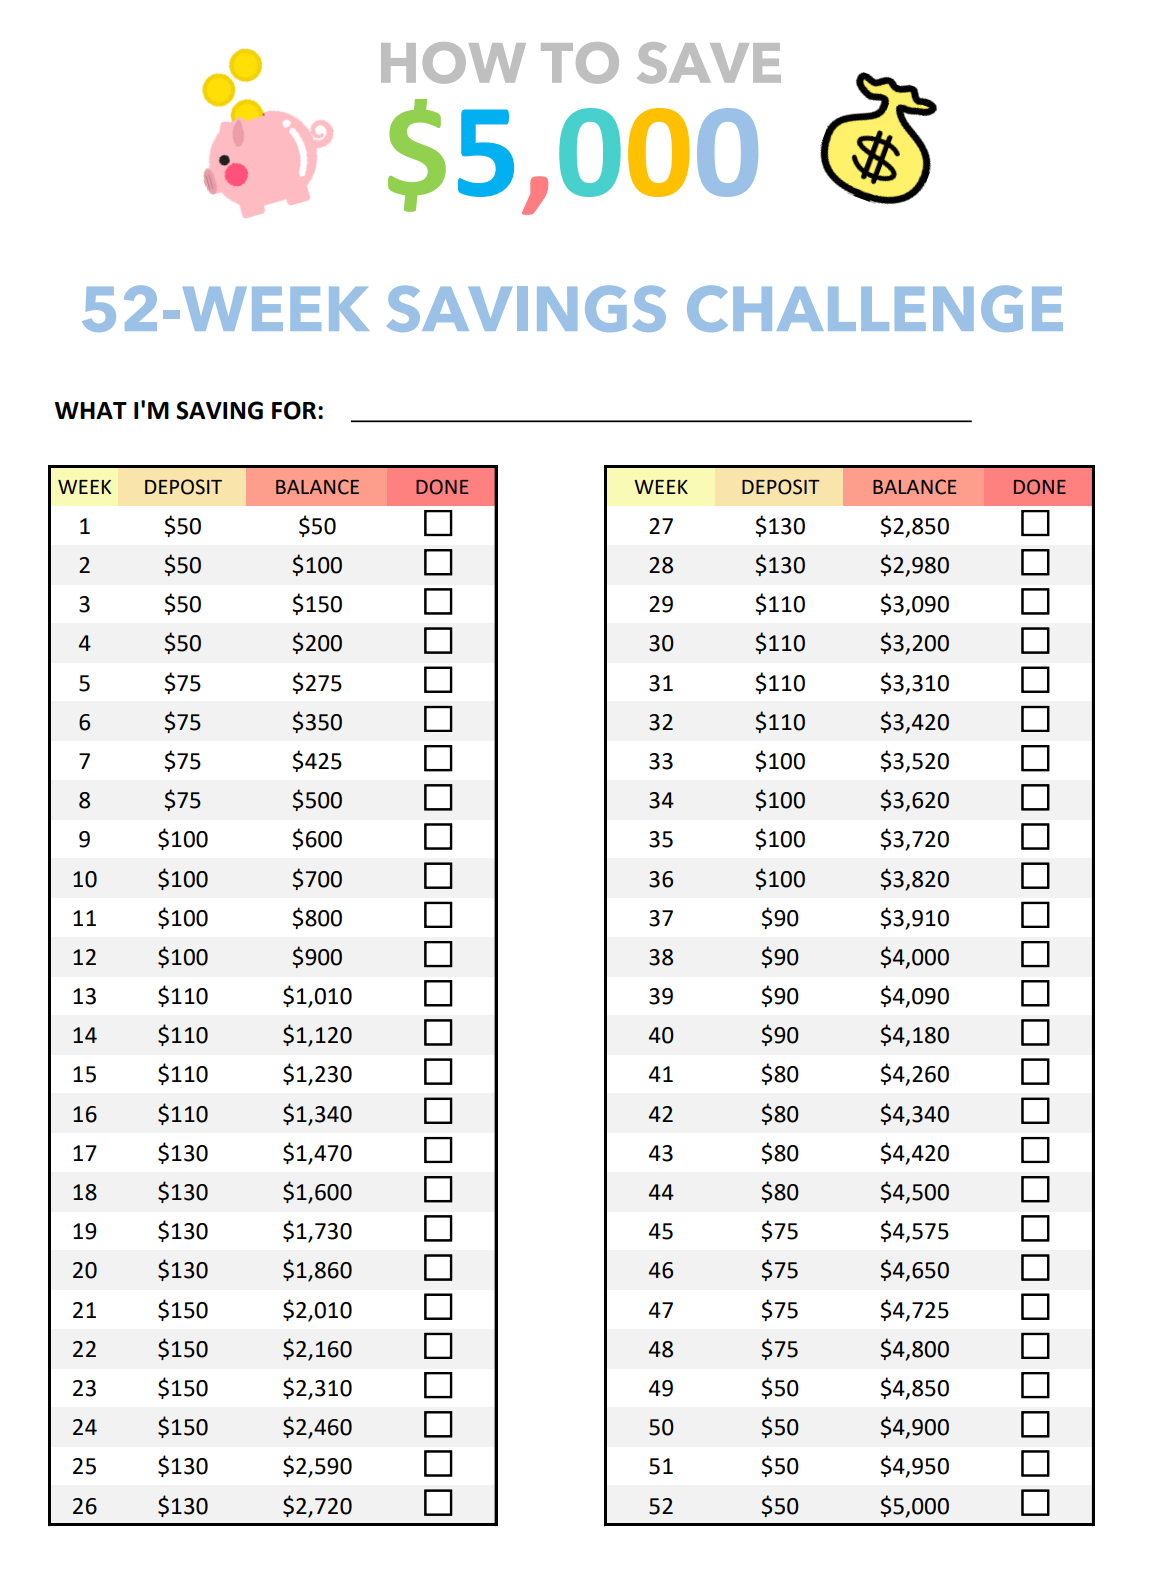 52 Week Money Challenge Printable 